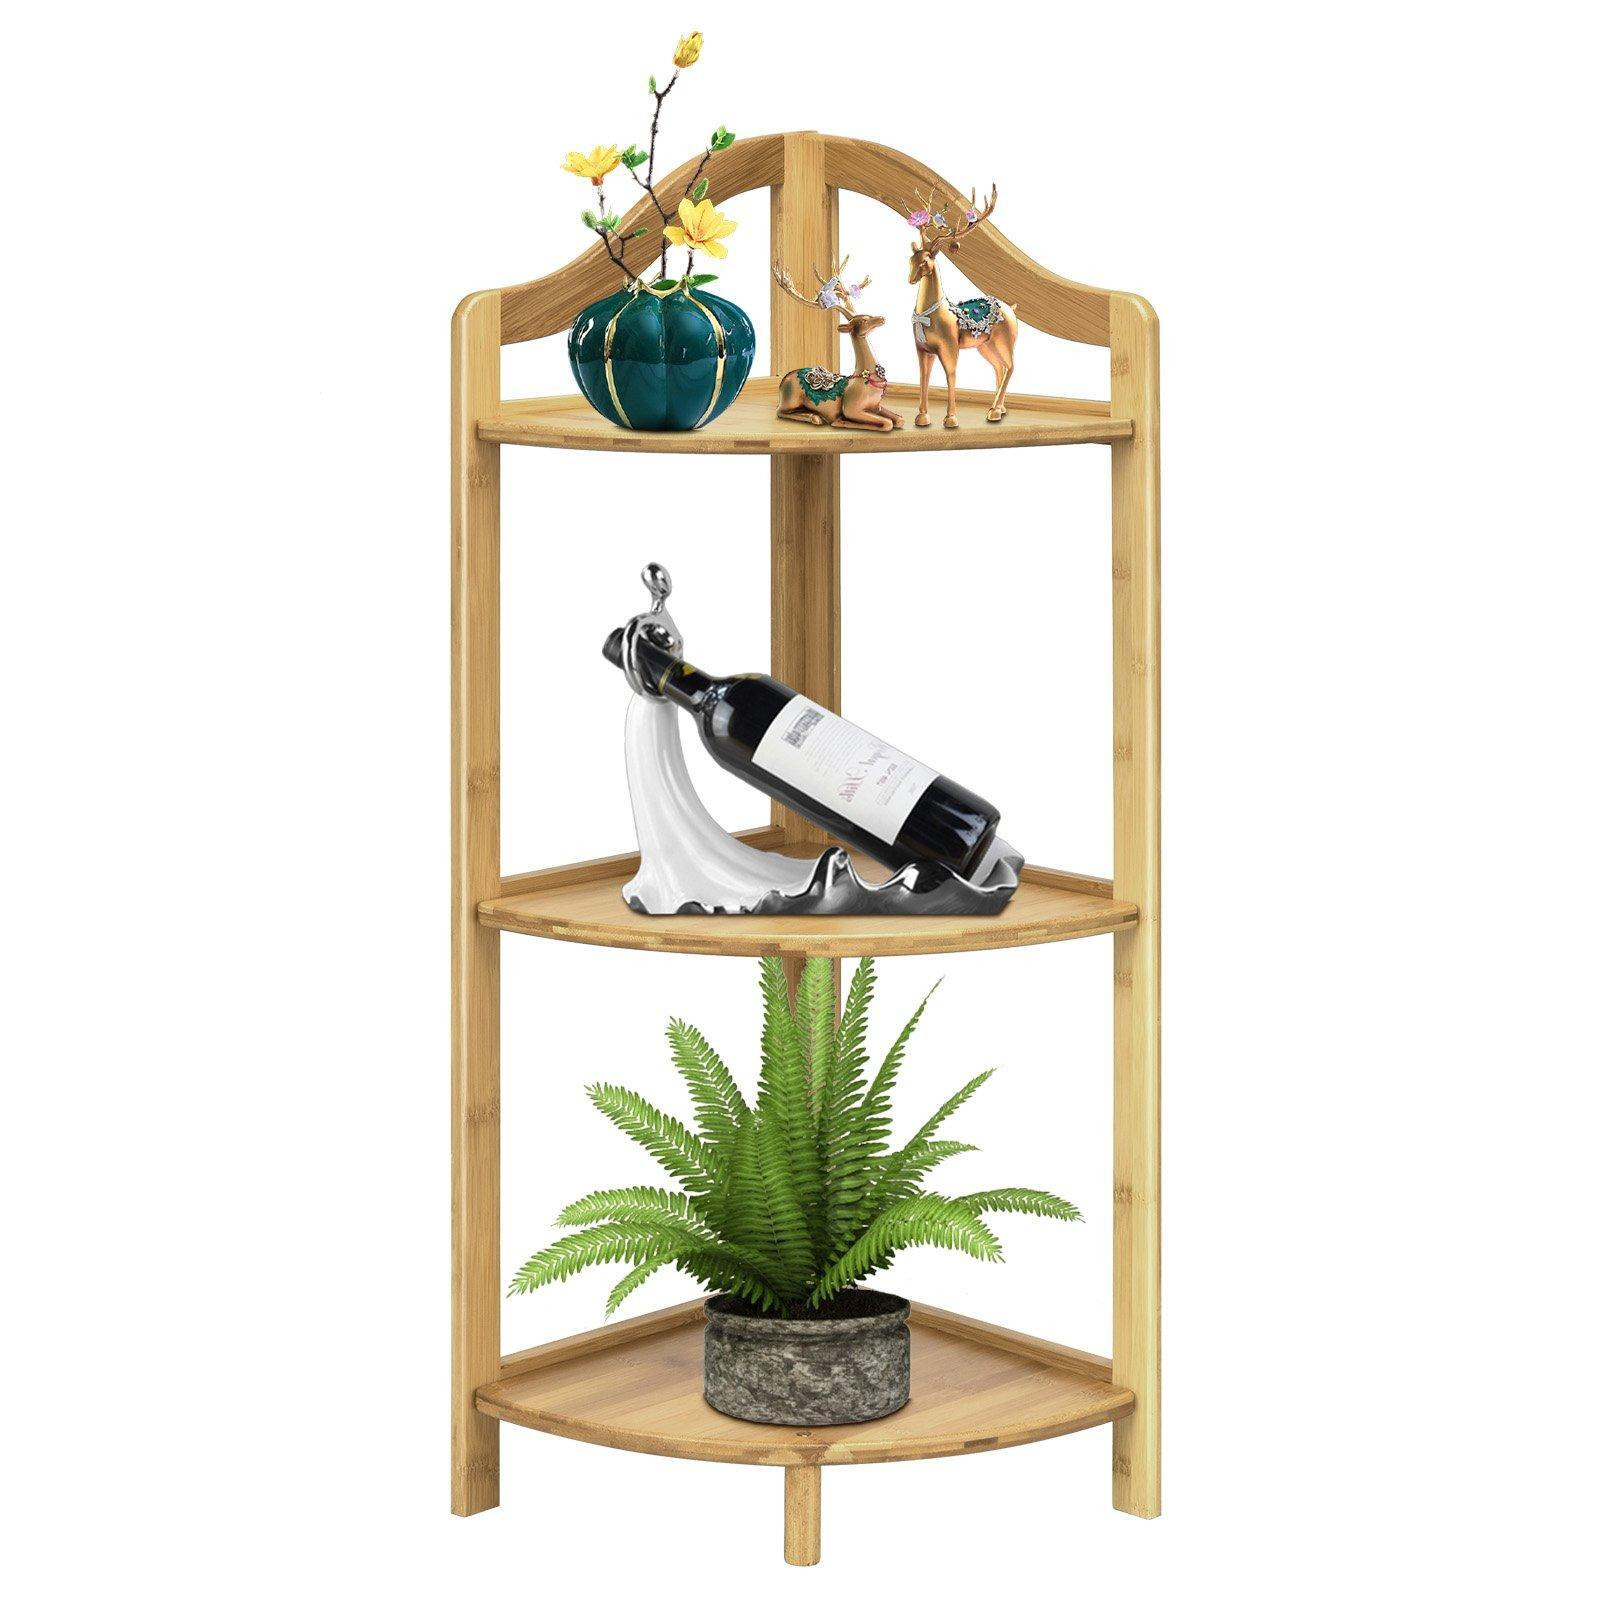 3-Tier Corner Ladder Shelf Freestanding Bookshelf Display Plant Stand Rack - image 1